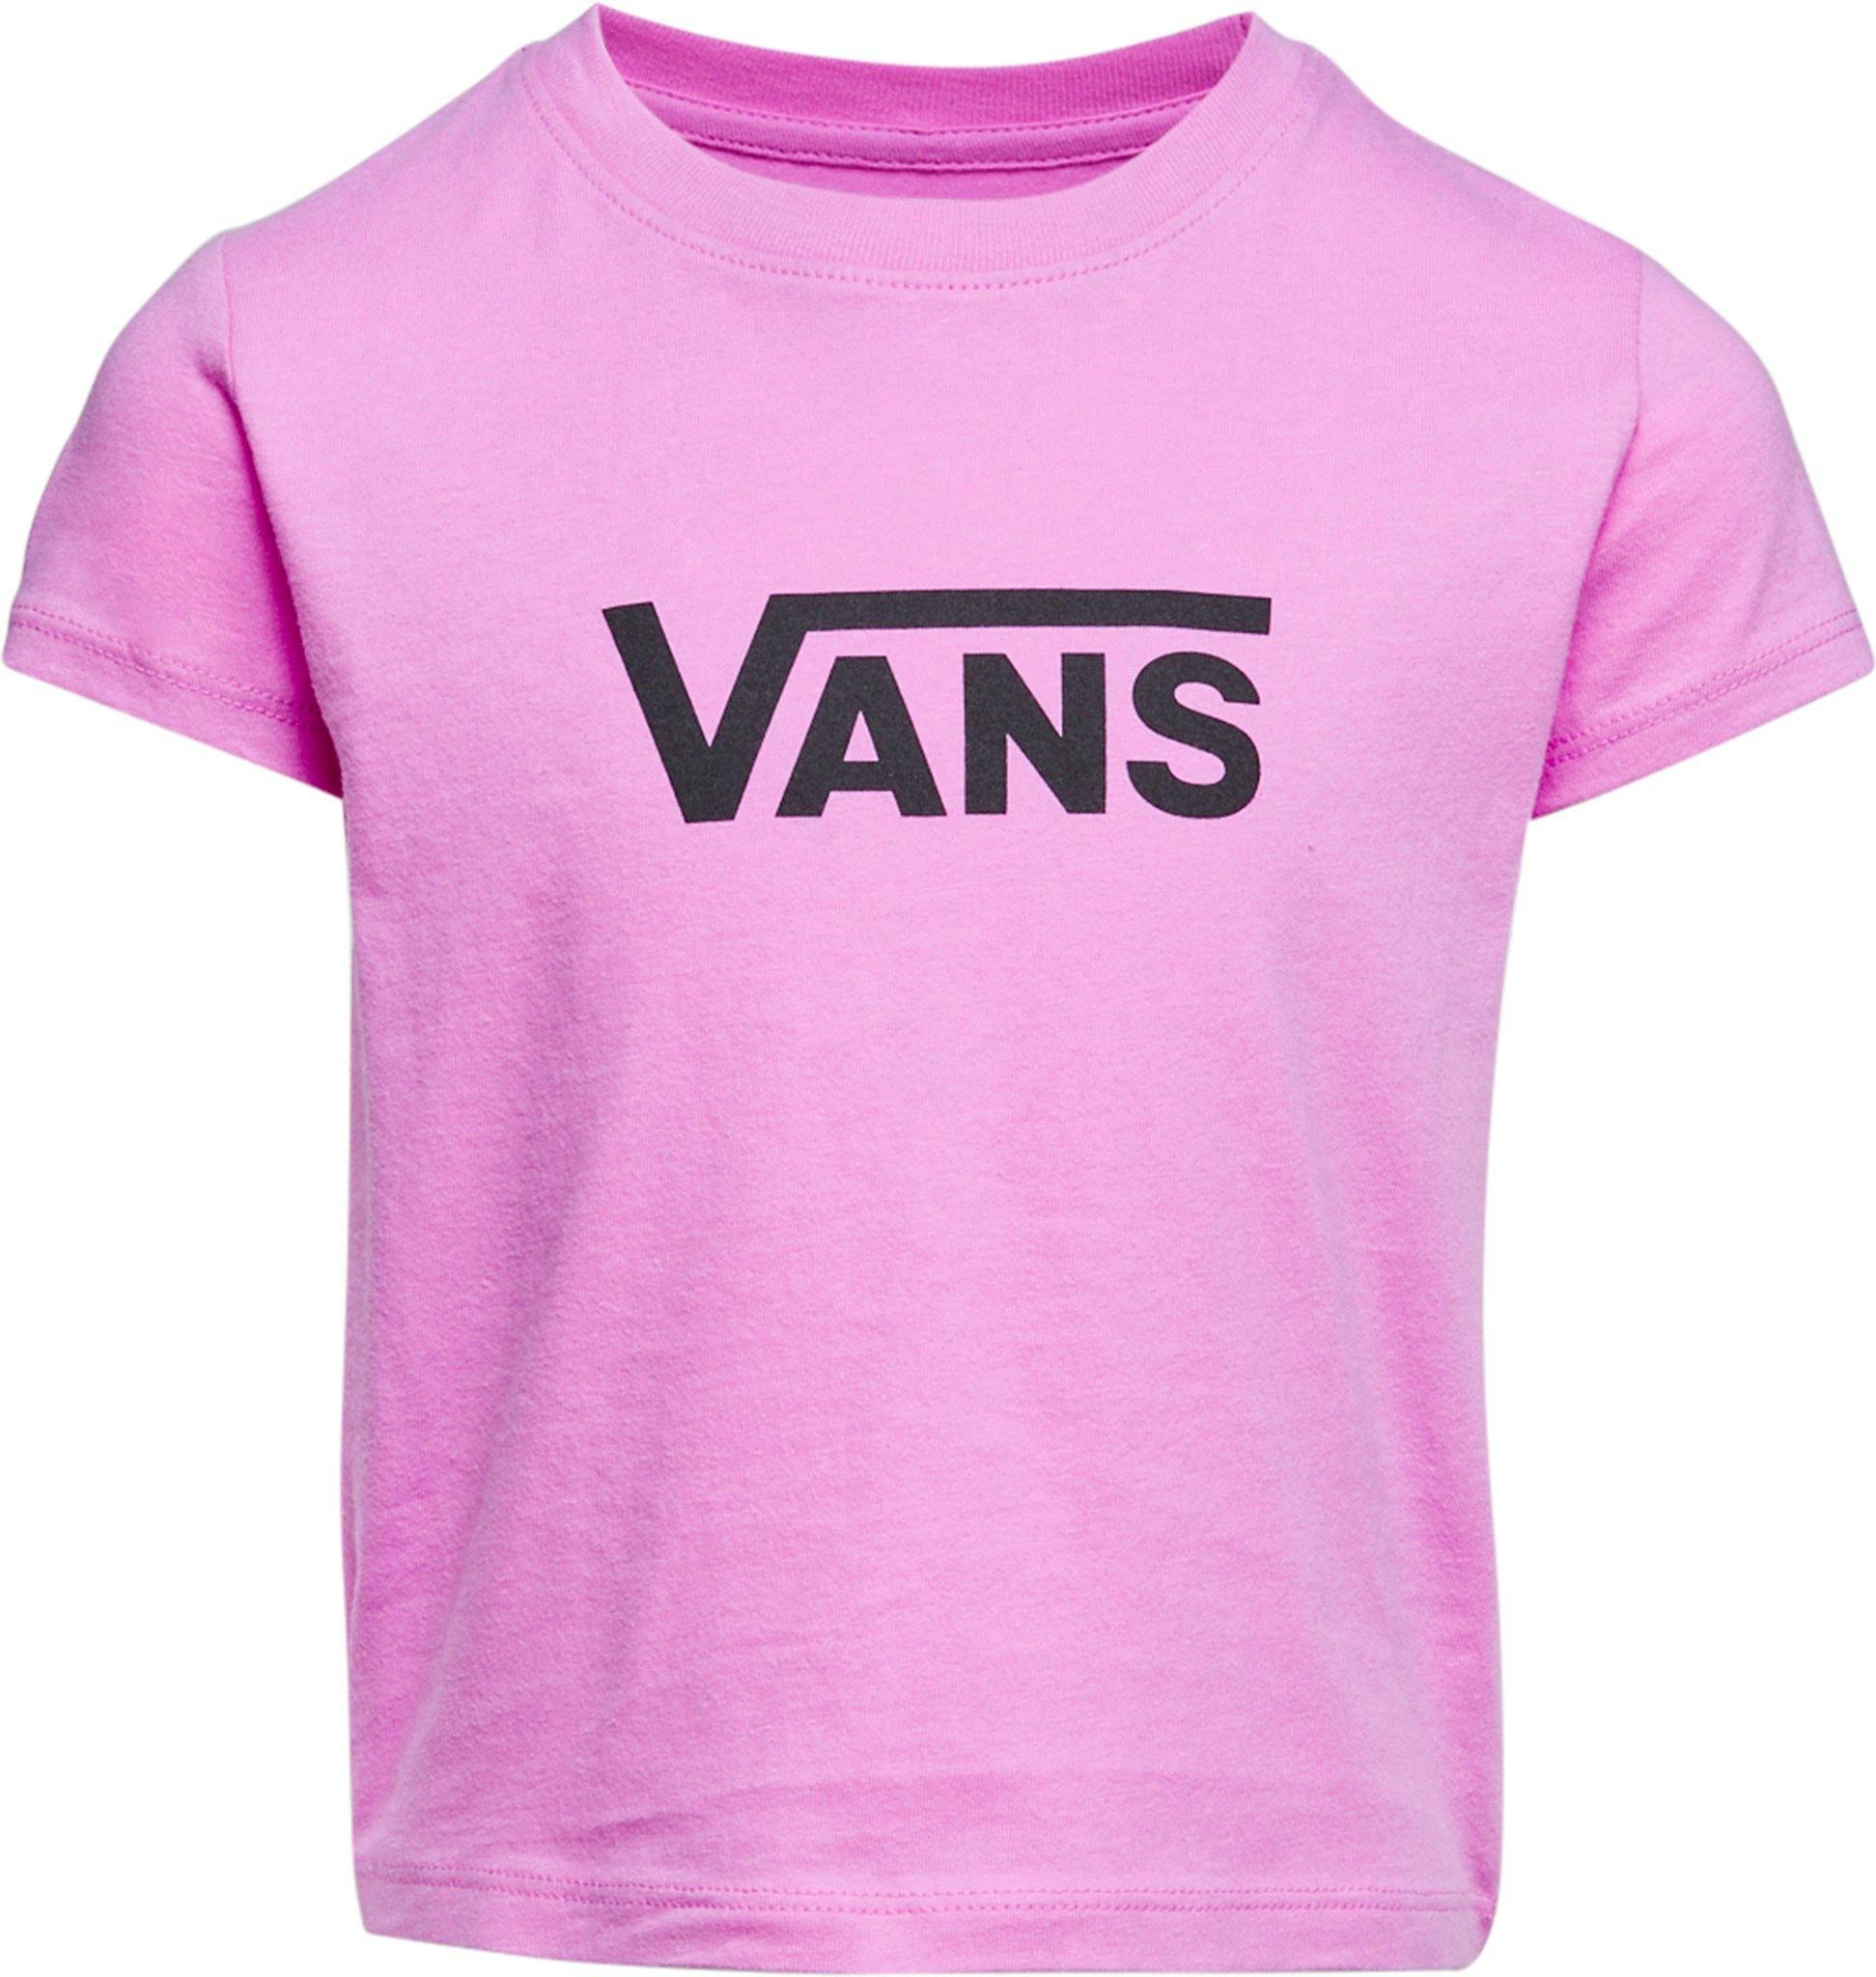 Product image for Flying V T-Shirt - Girls